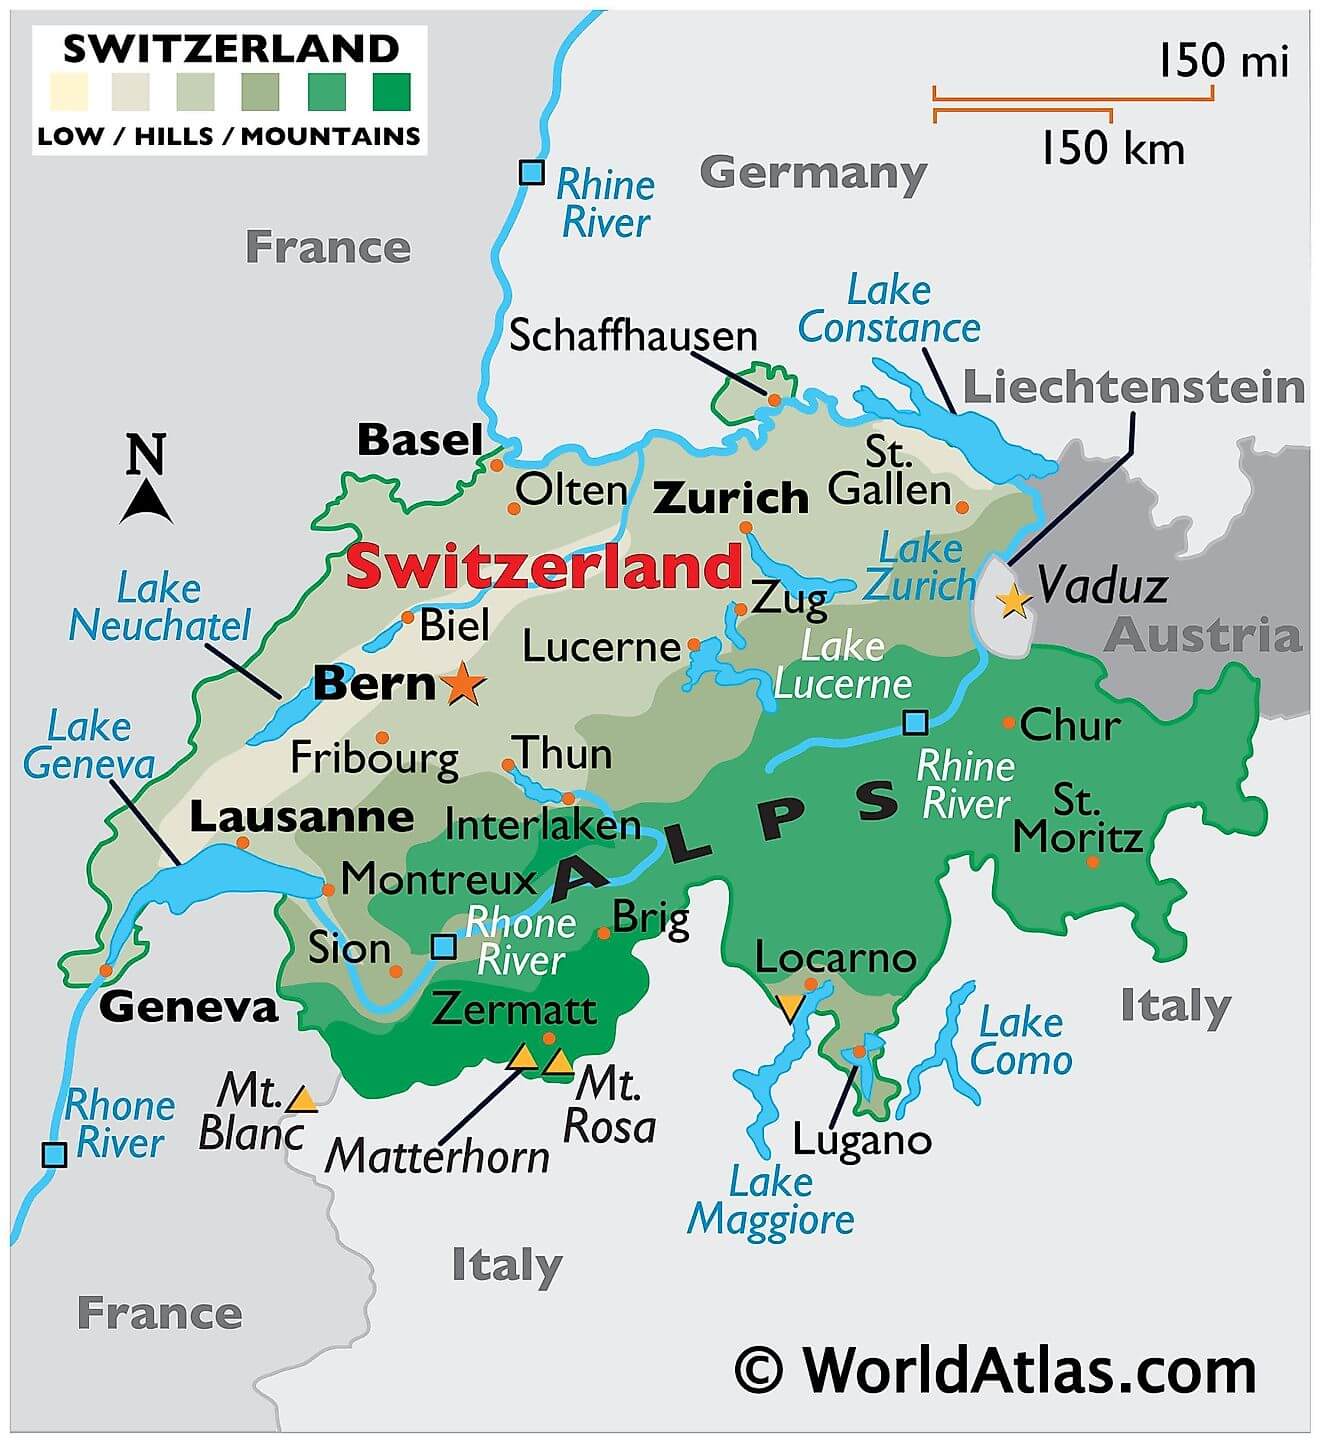 Physical Map of Switzerland